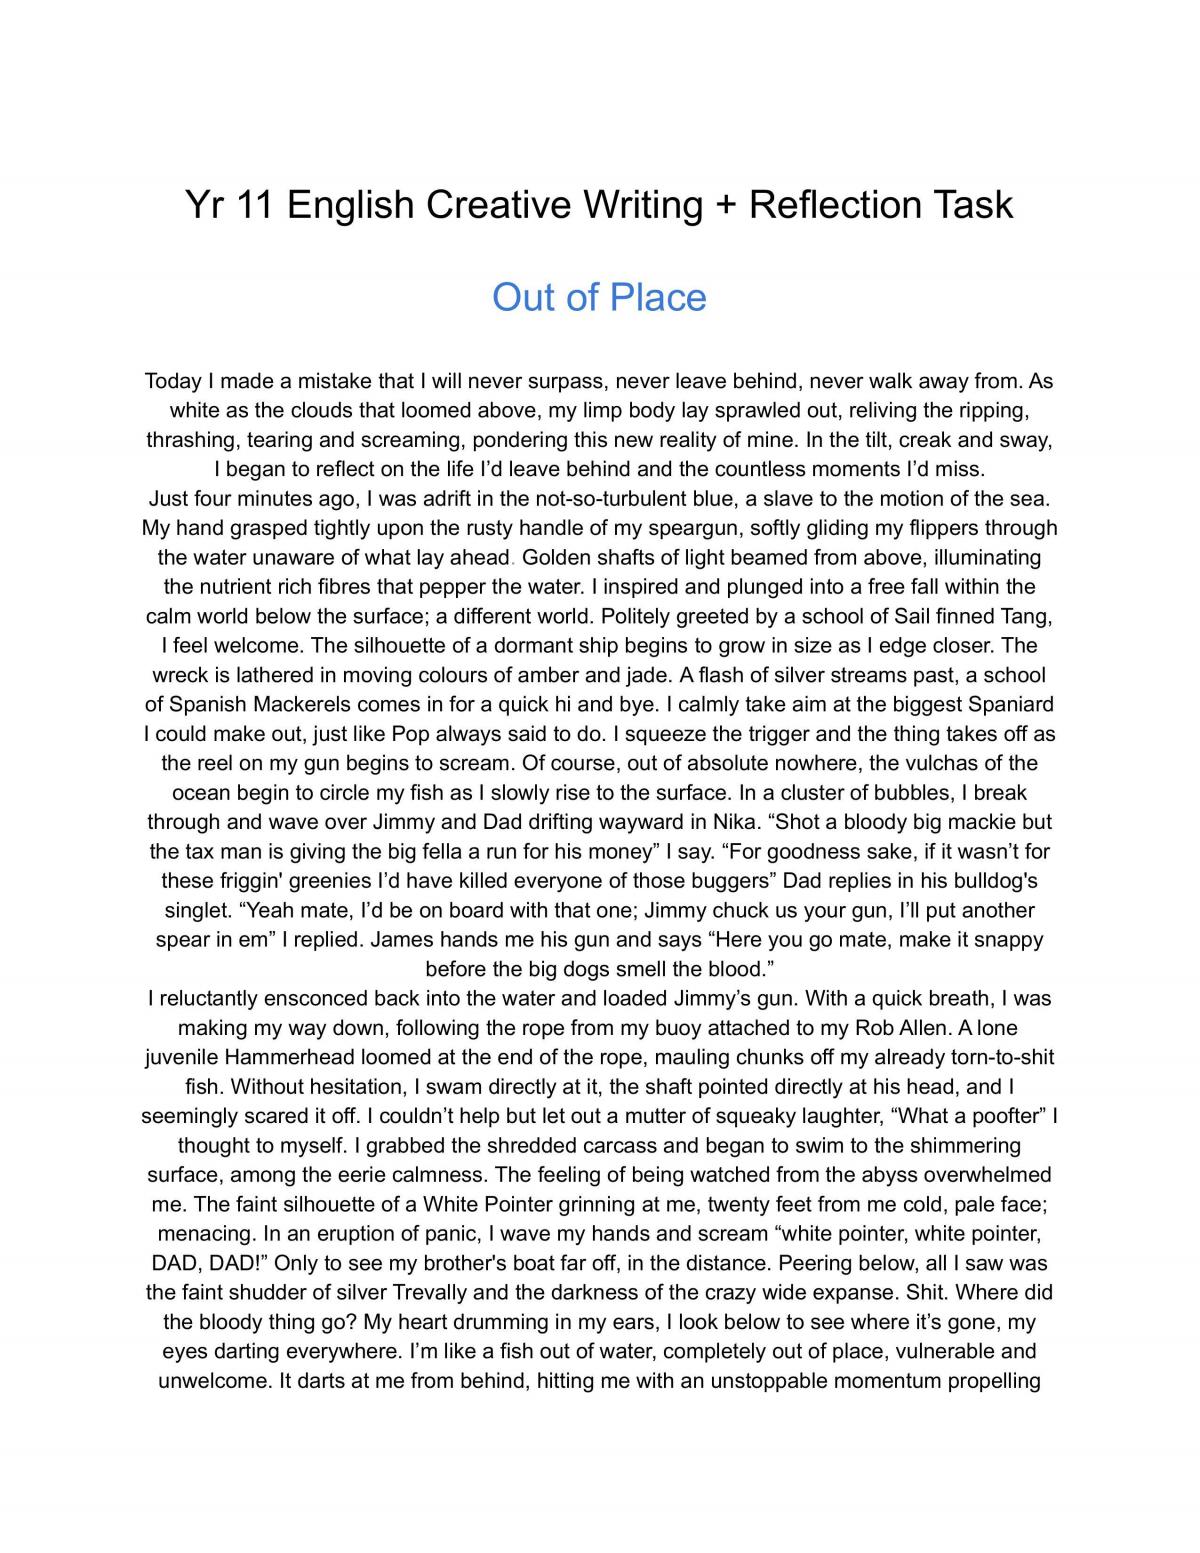 creative writing for year 11